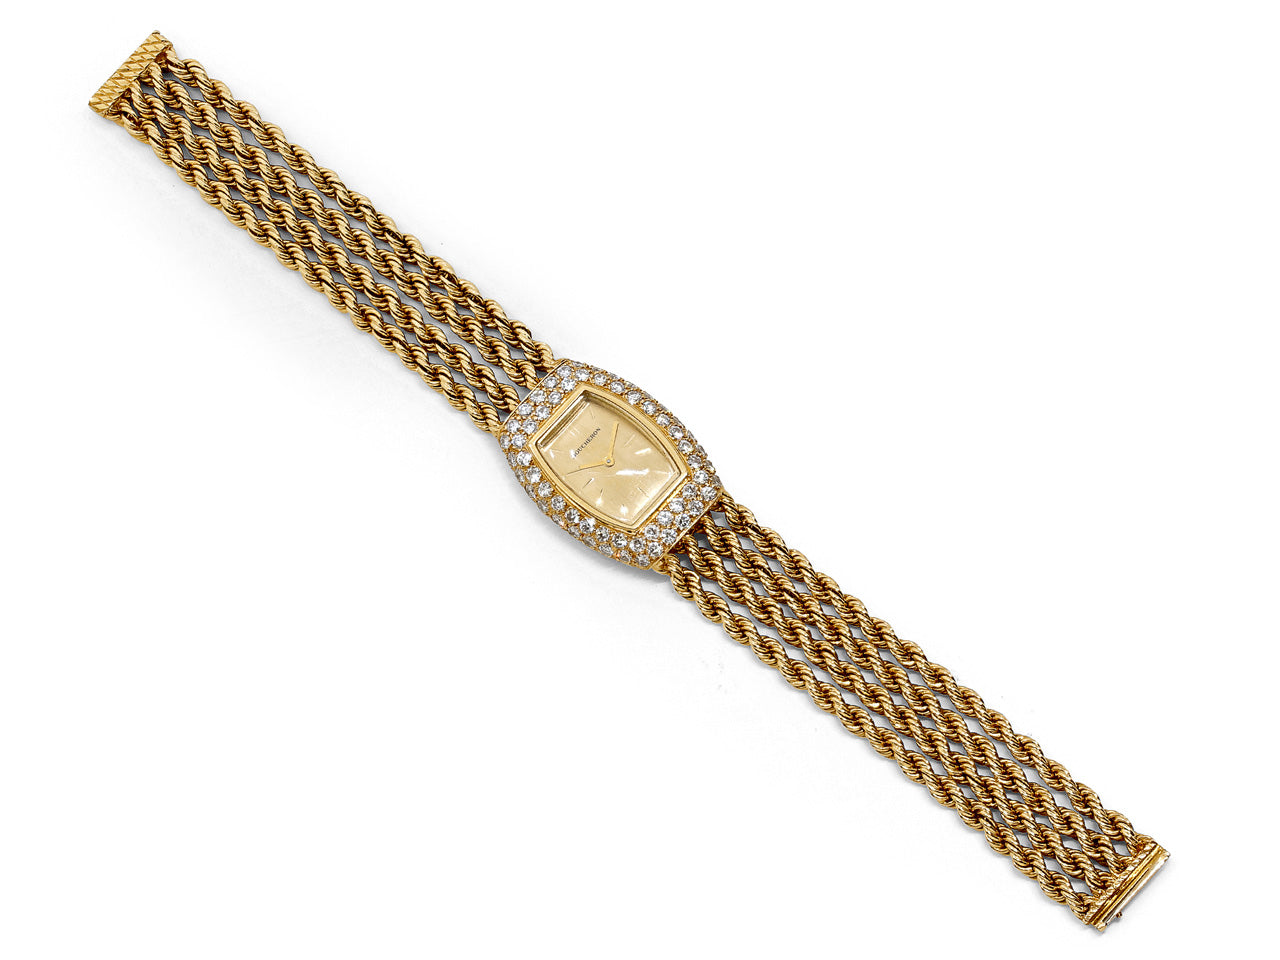 Boucheron Diamond Watch in 18K Gold